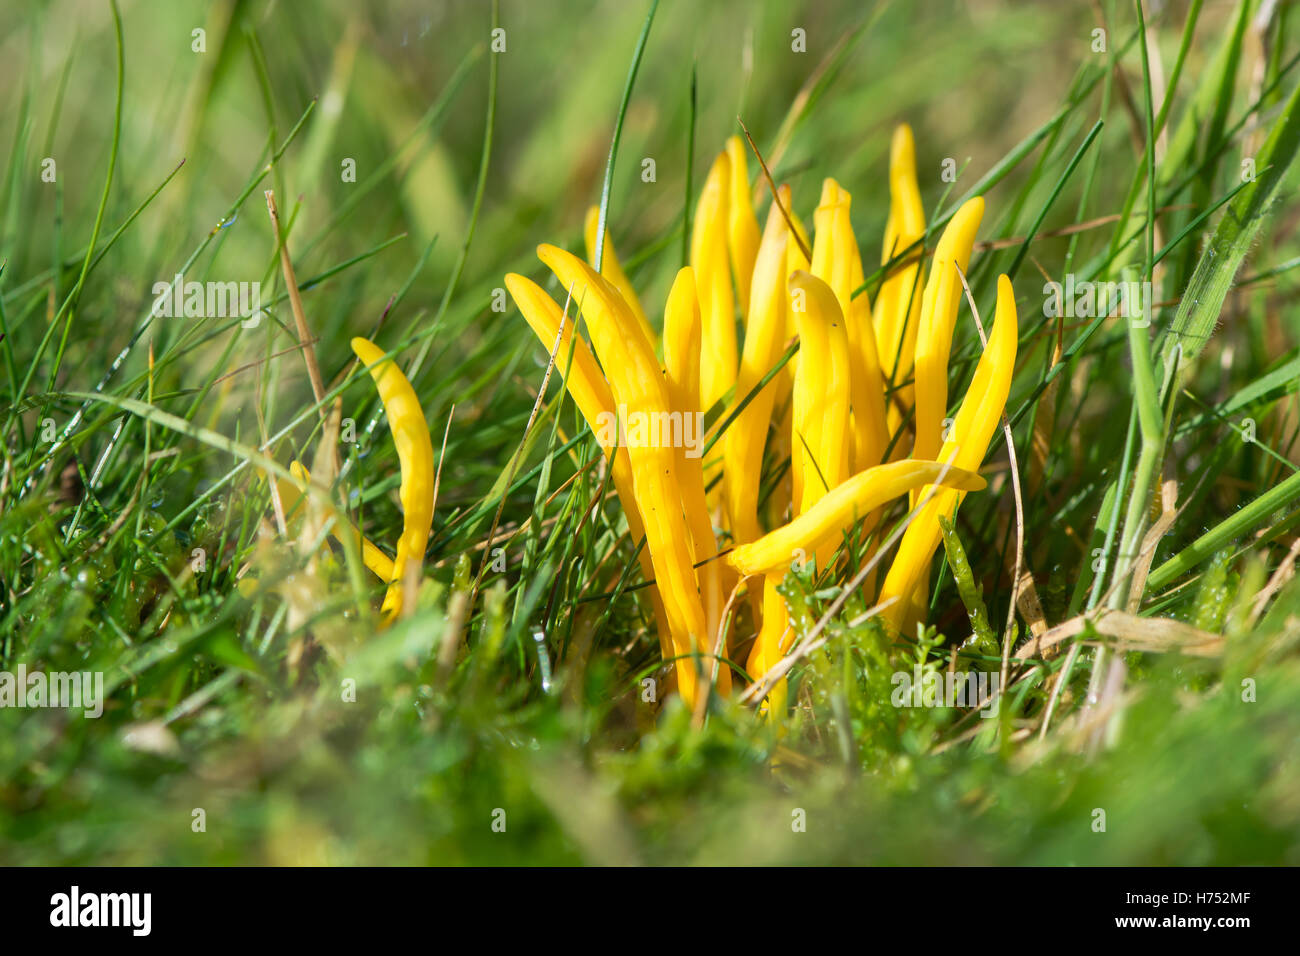 Goldene Spindeln (Clavulinopsis Fusiformis) Pilze. Leuchtend gelber Pilz in dichten Büschel in der Familie Clavariaceae Stockfoto